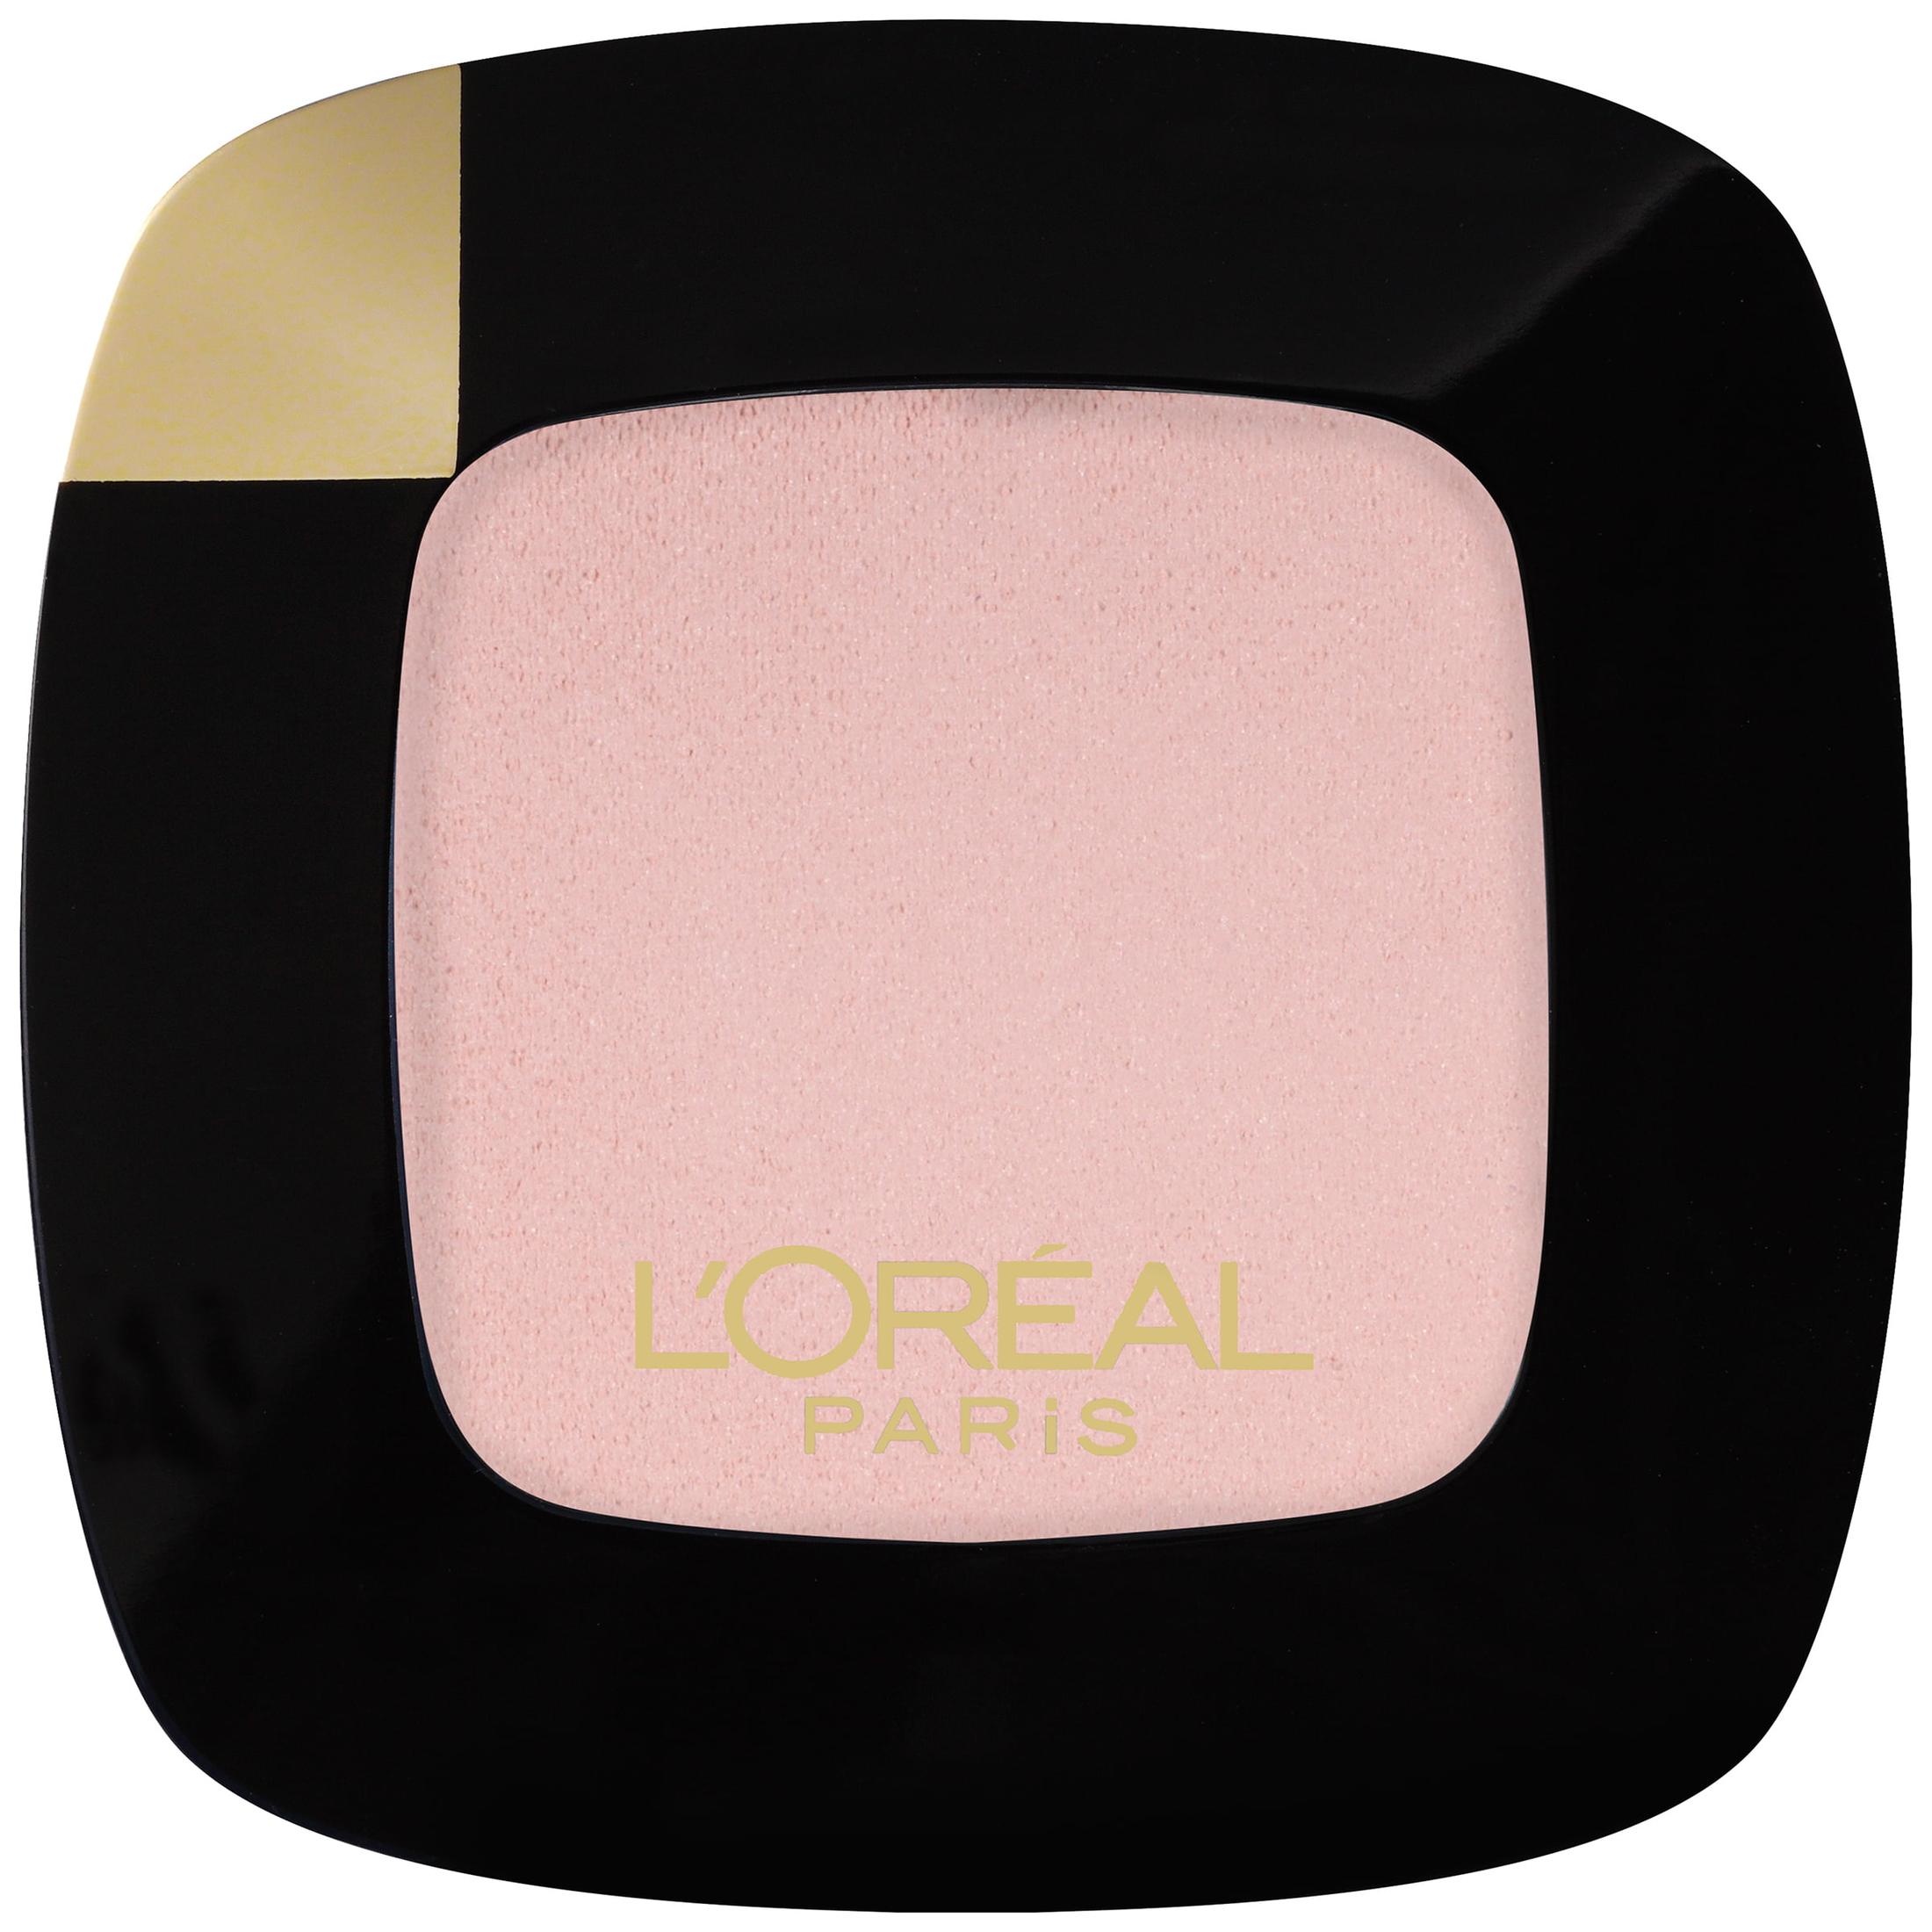 L'Oreal Paris Colour Riche Monos Eyeshadow, Mademoiselle Pink - image 1 of 4